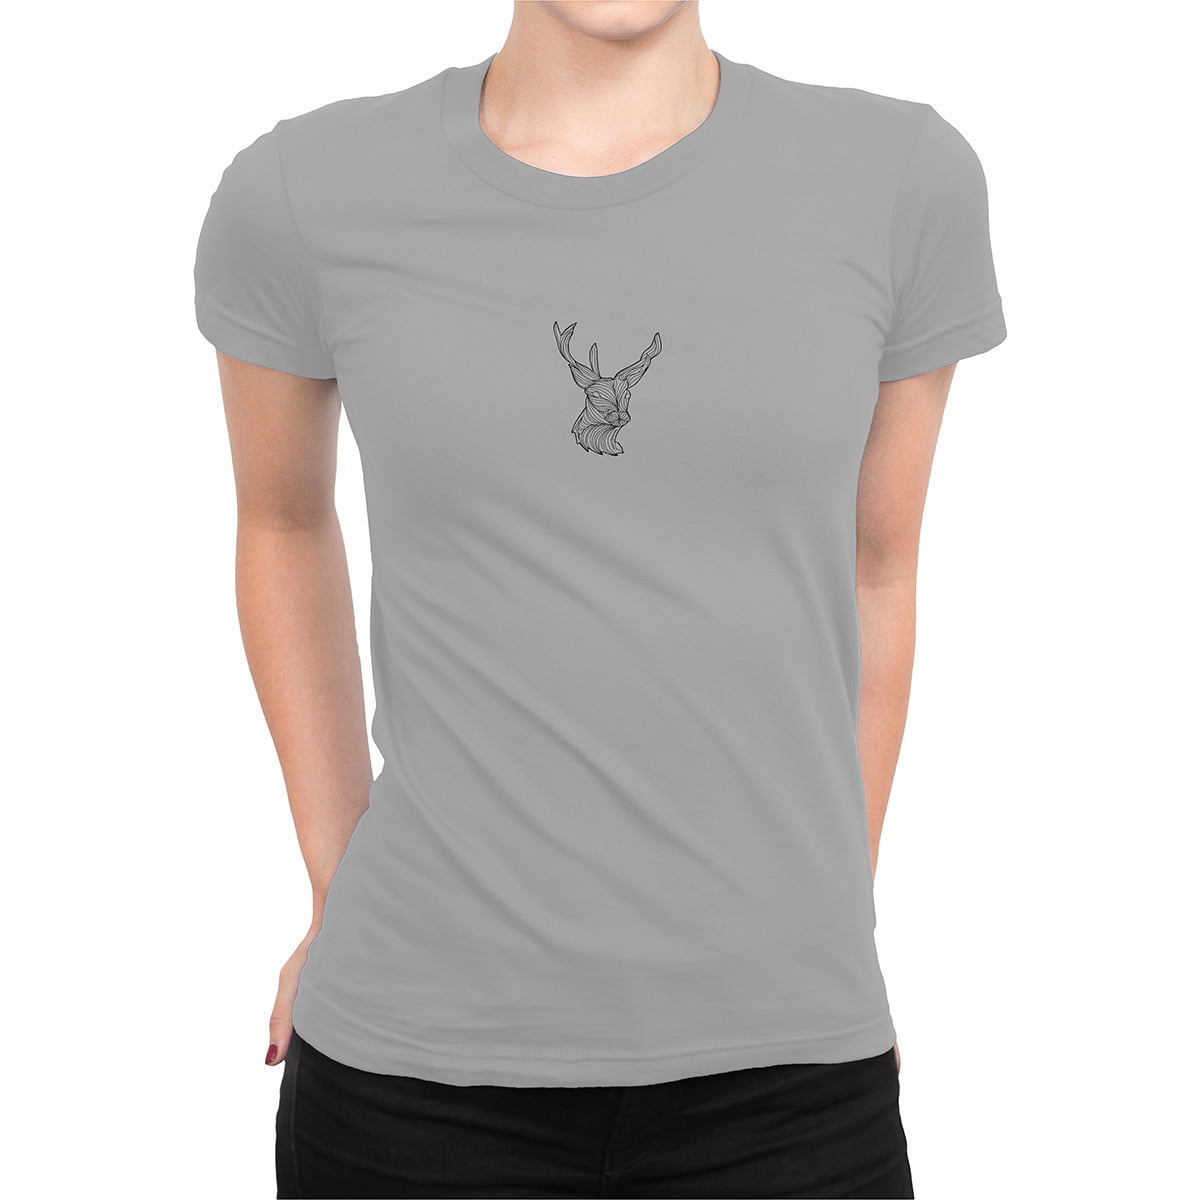 Orjinal geyik mandala siyah fxsca2194c kadin tshirt gri orta kucuk - geyik mandala kadın t-shirt - figurex